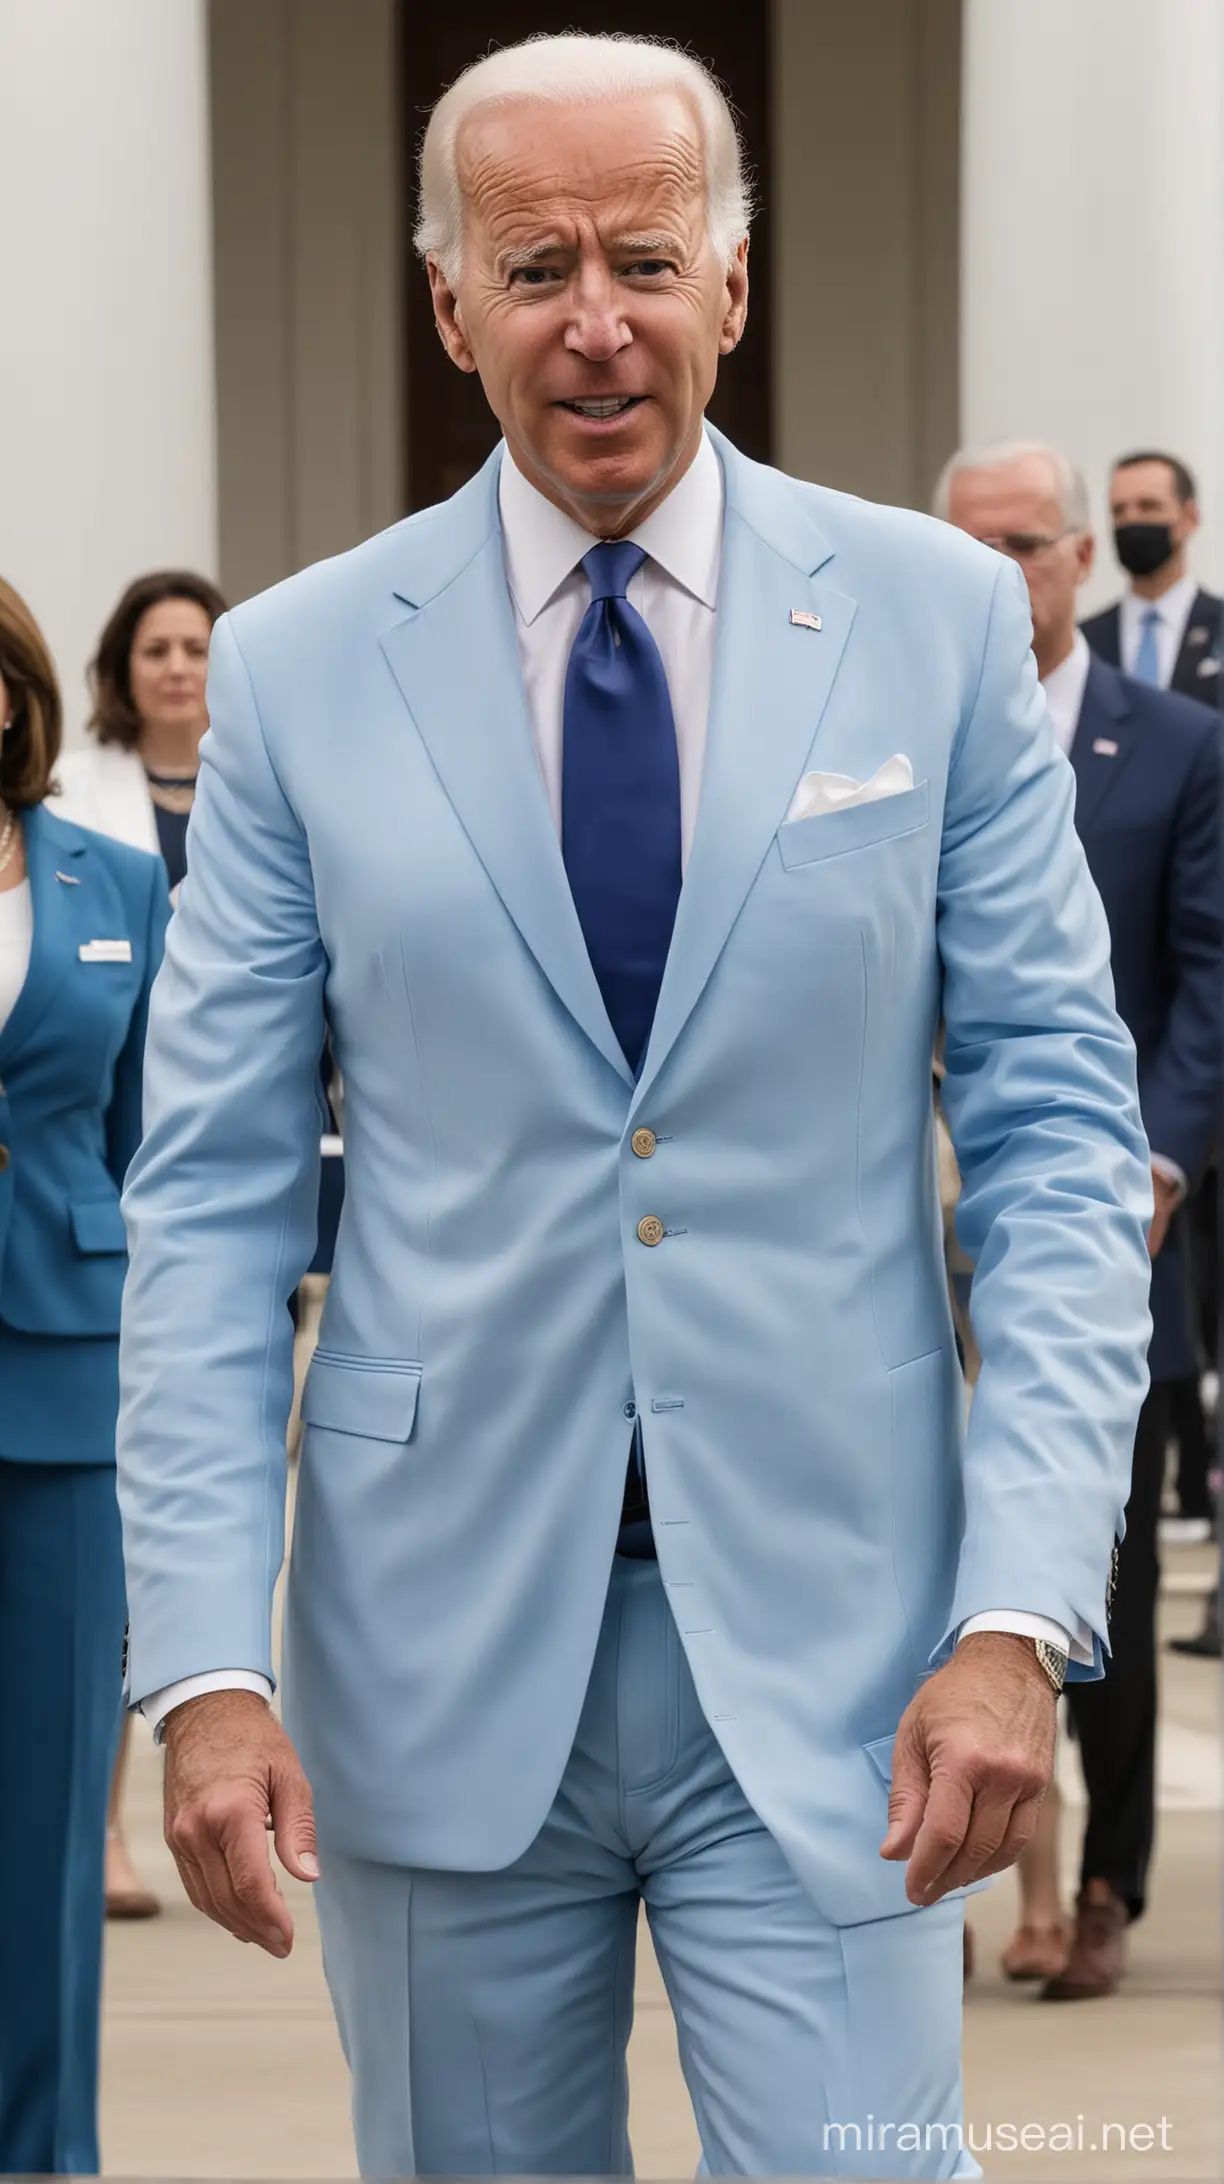 Joe Biden Standing in the Heart of America in Blue Suit